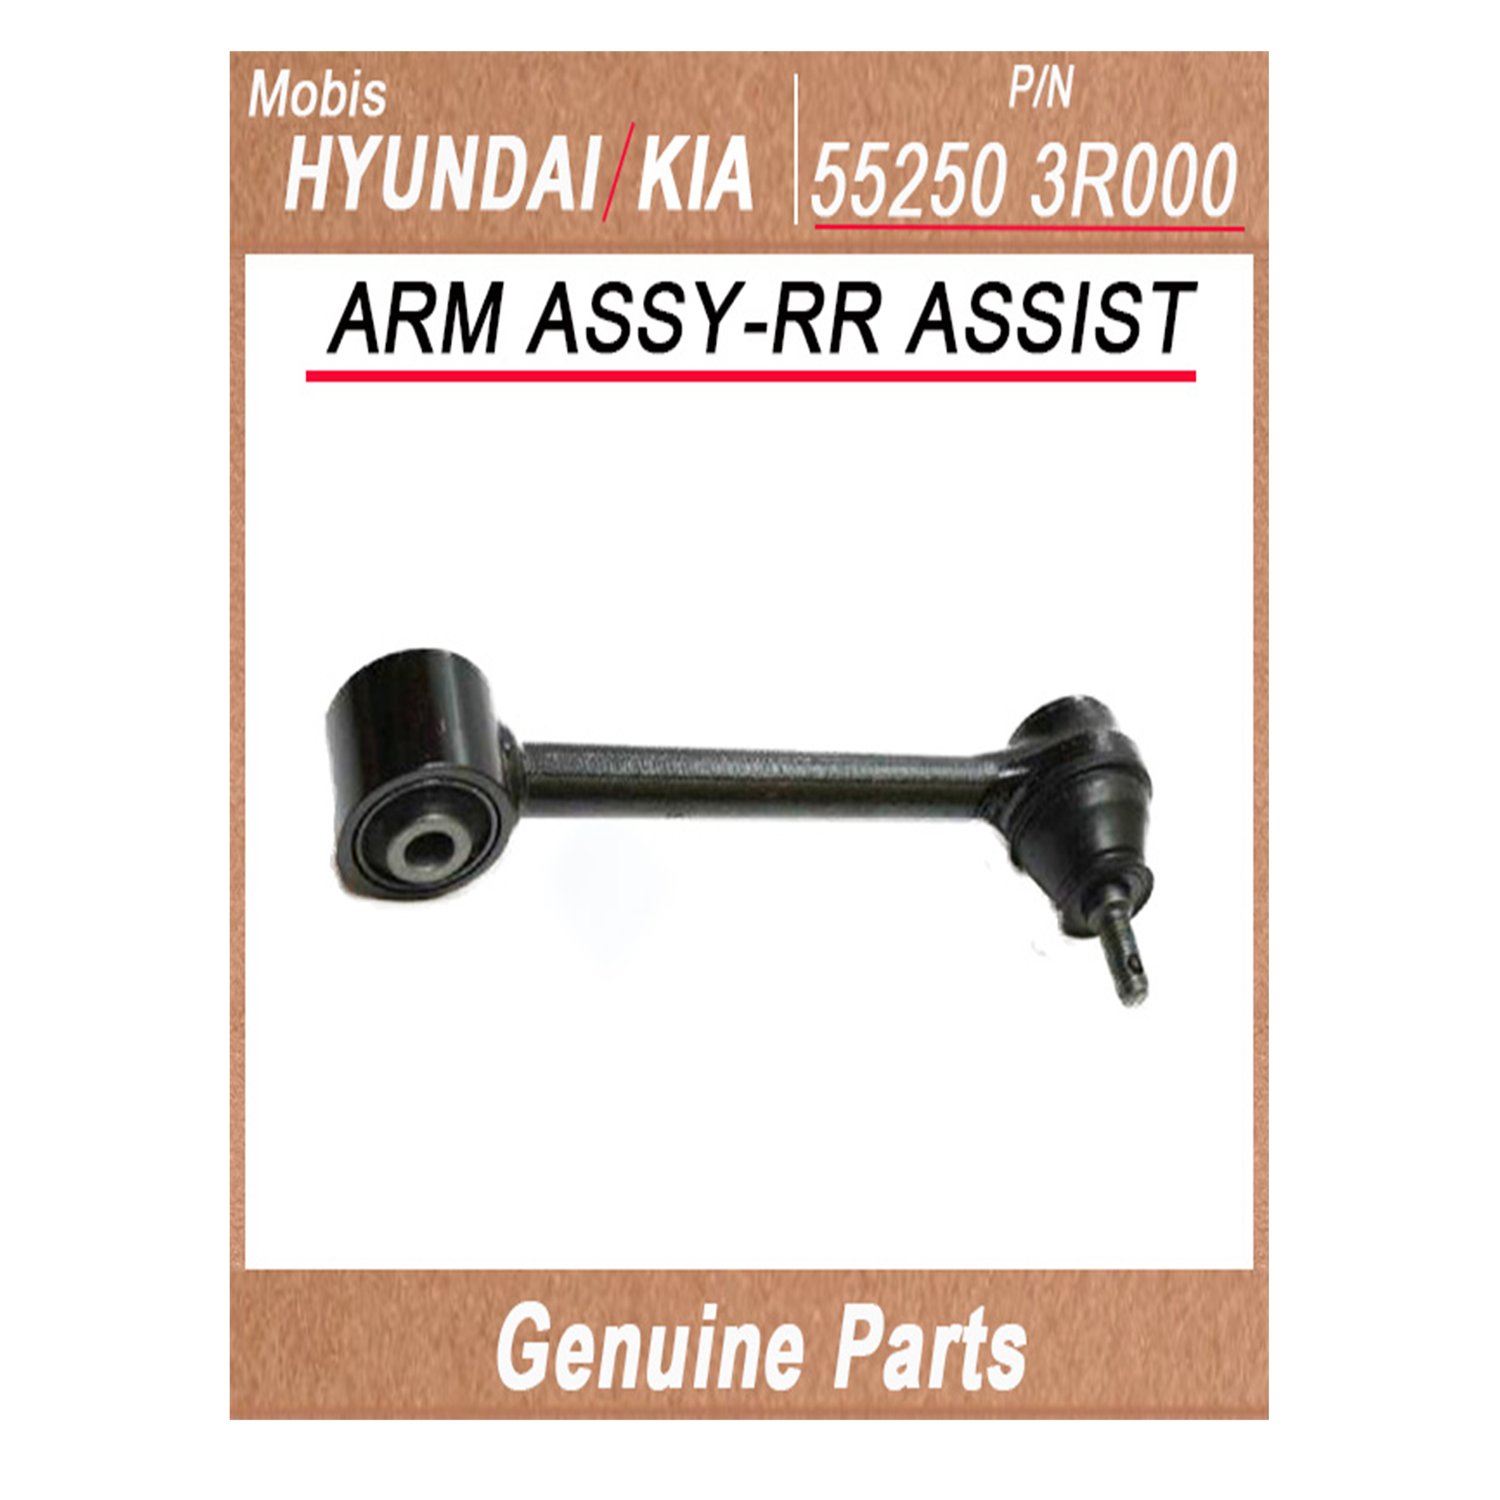 552503R000 _ ARM ASSY_RR ASSIST _ Genuine Korean Automotive Spare Parts _ Hyundai Kia _Mobis_